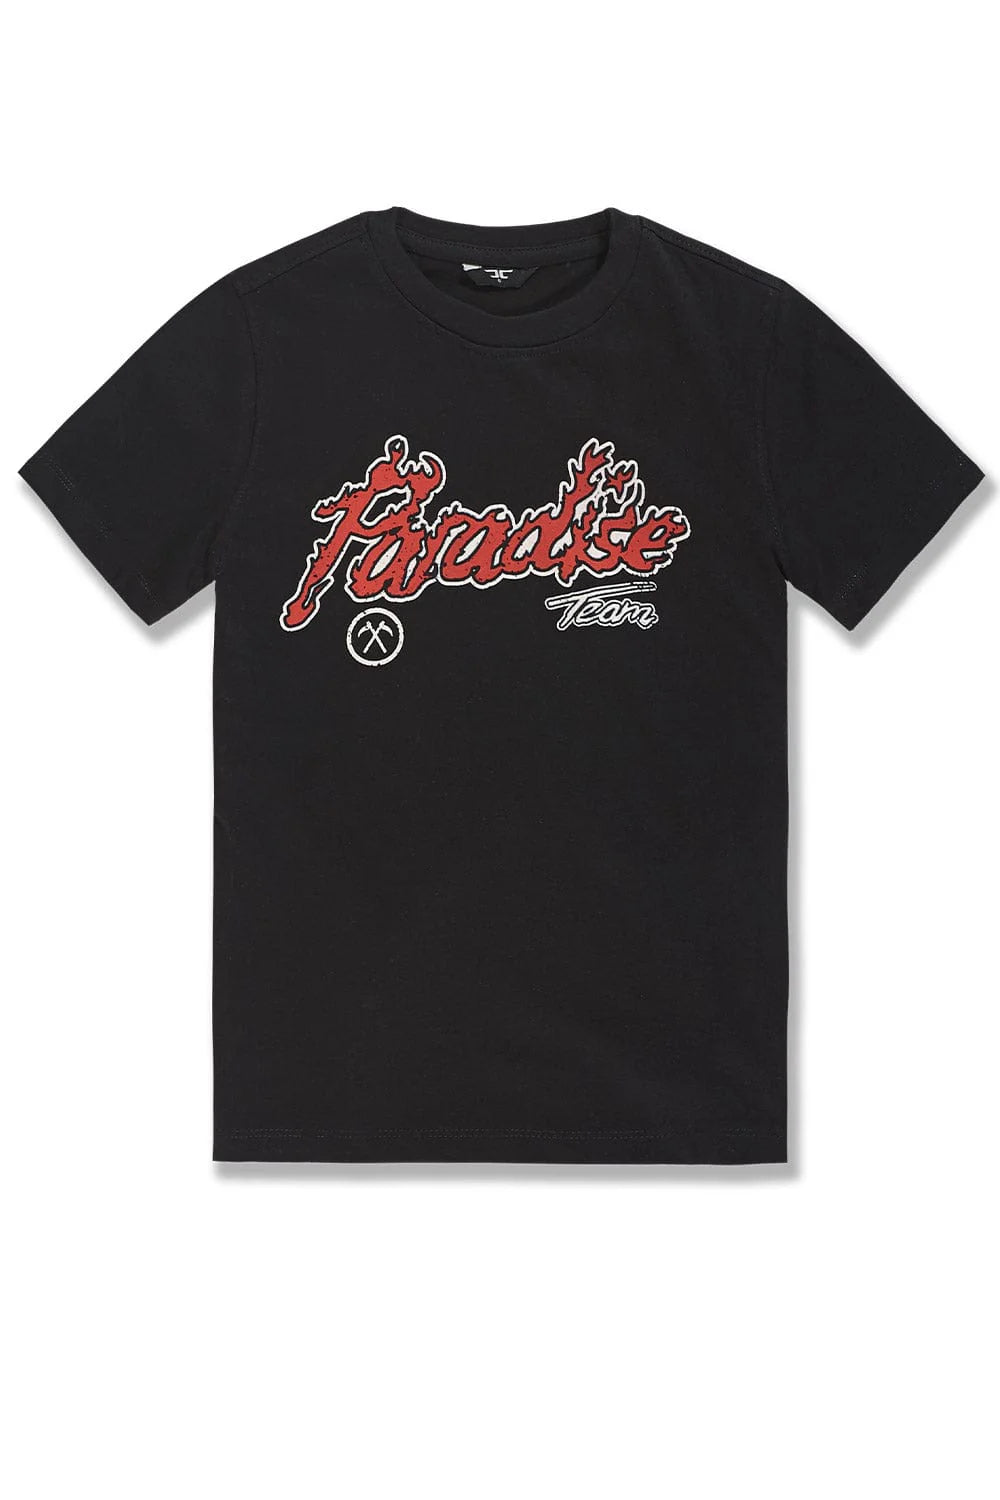 Jordan Craig -Kids Paradise Tour T-Shirt -Black